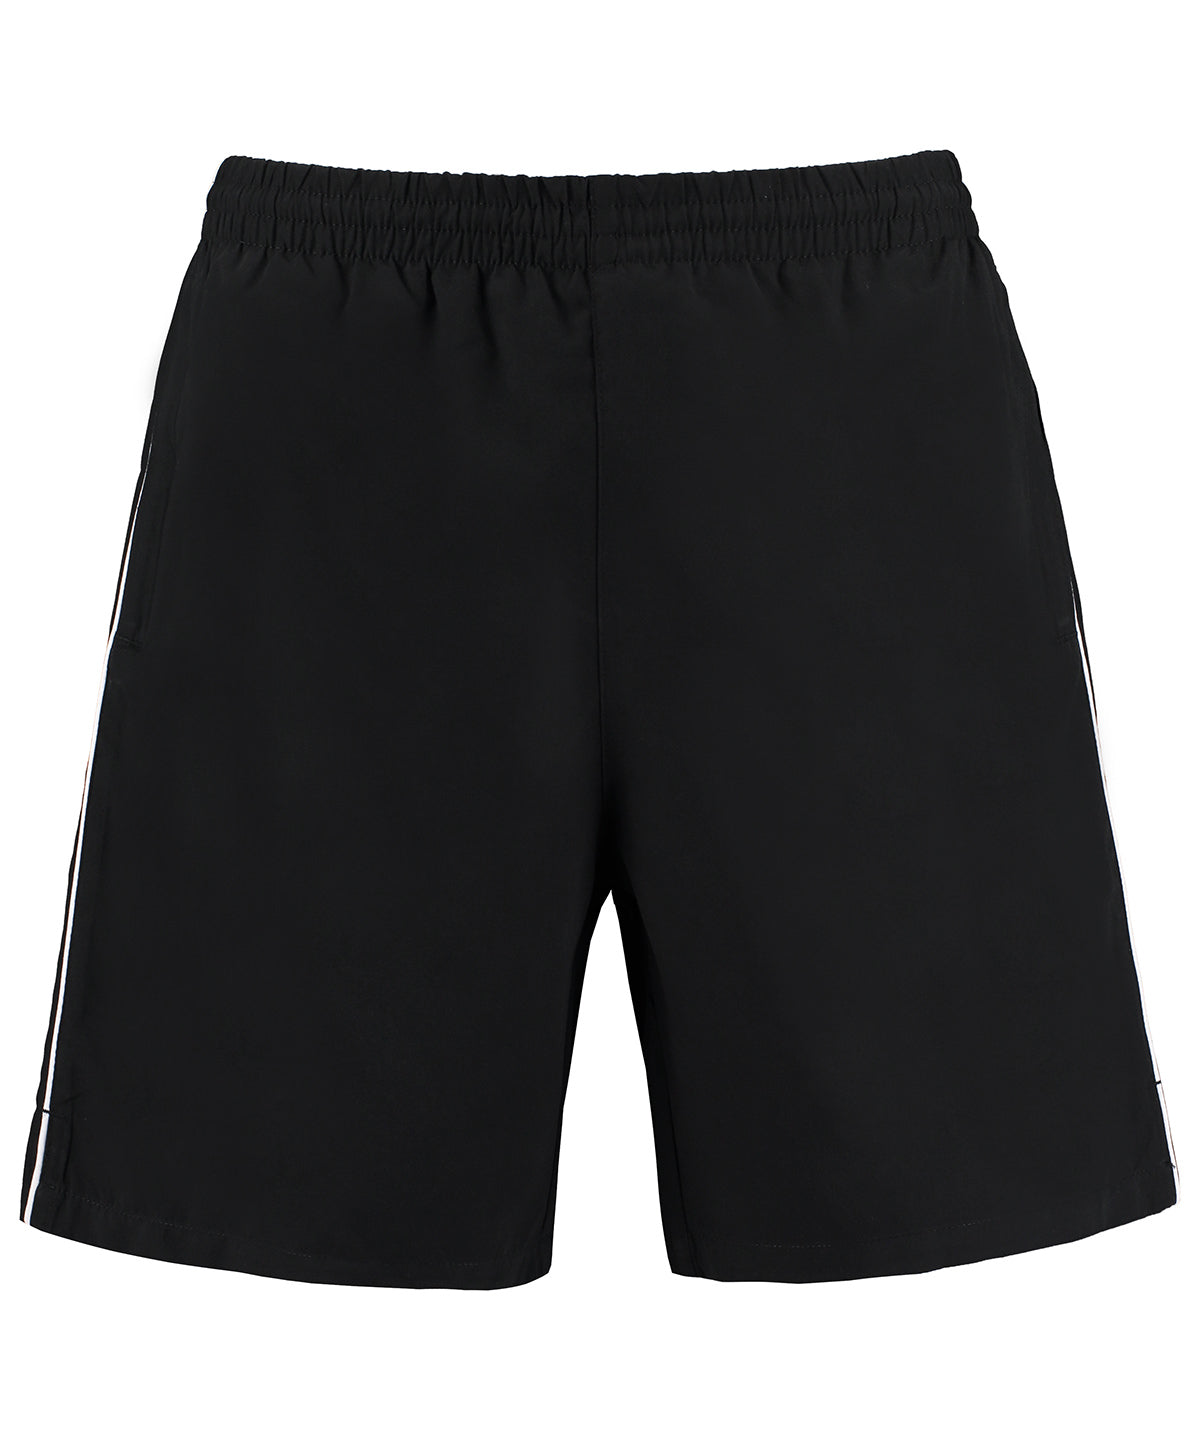 Personalised Shorts - Black Kustom Kit Gamegear® track short (classic fit)